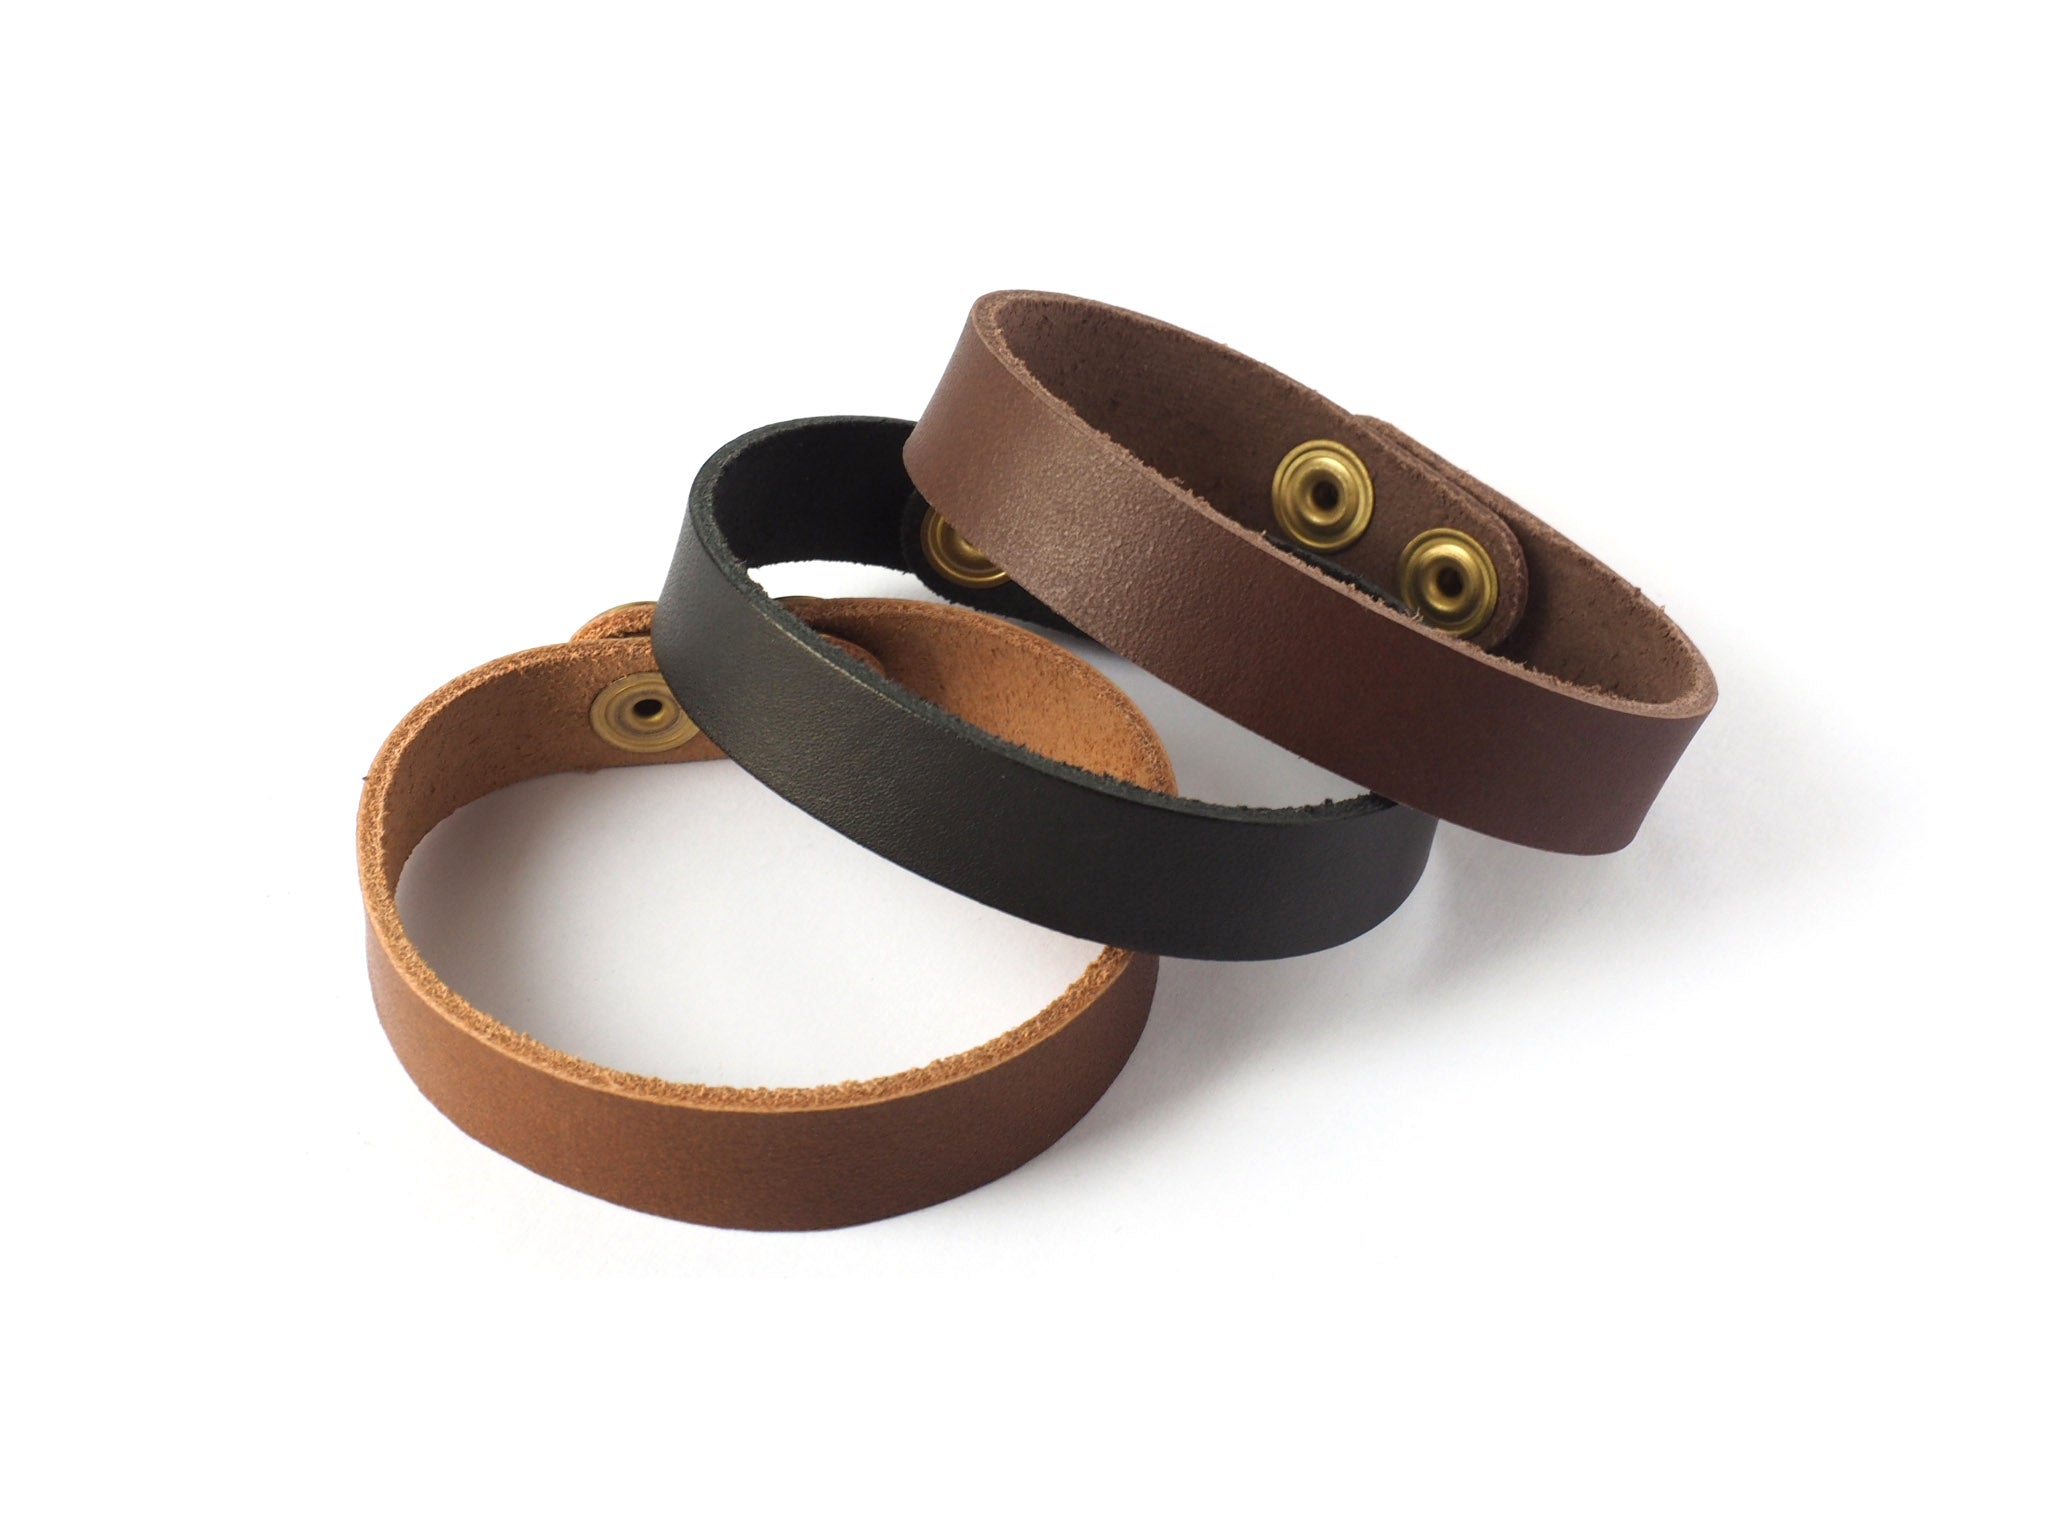 leather bracelet braided round - light brown 